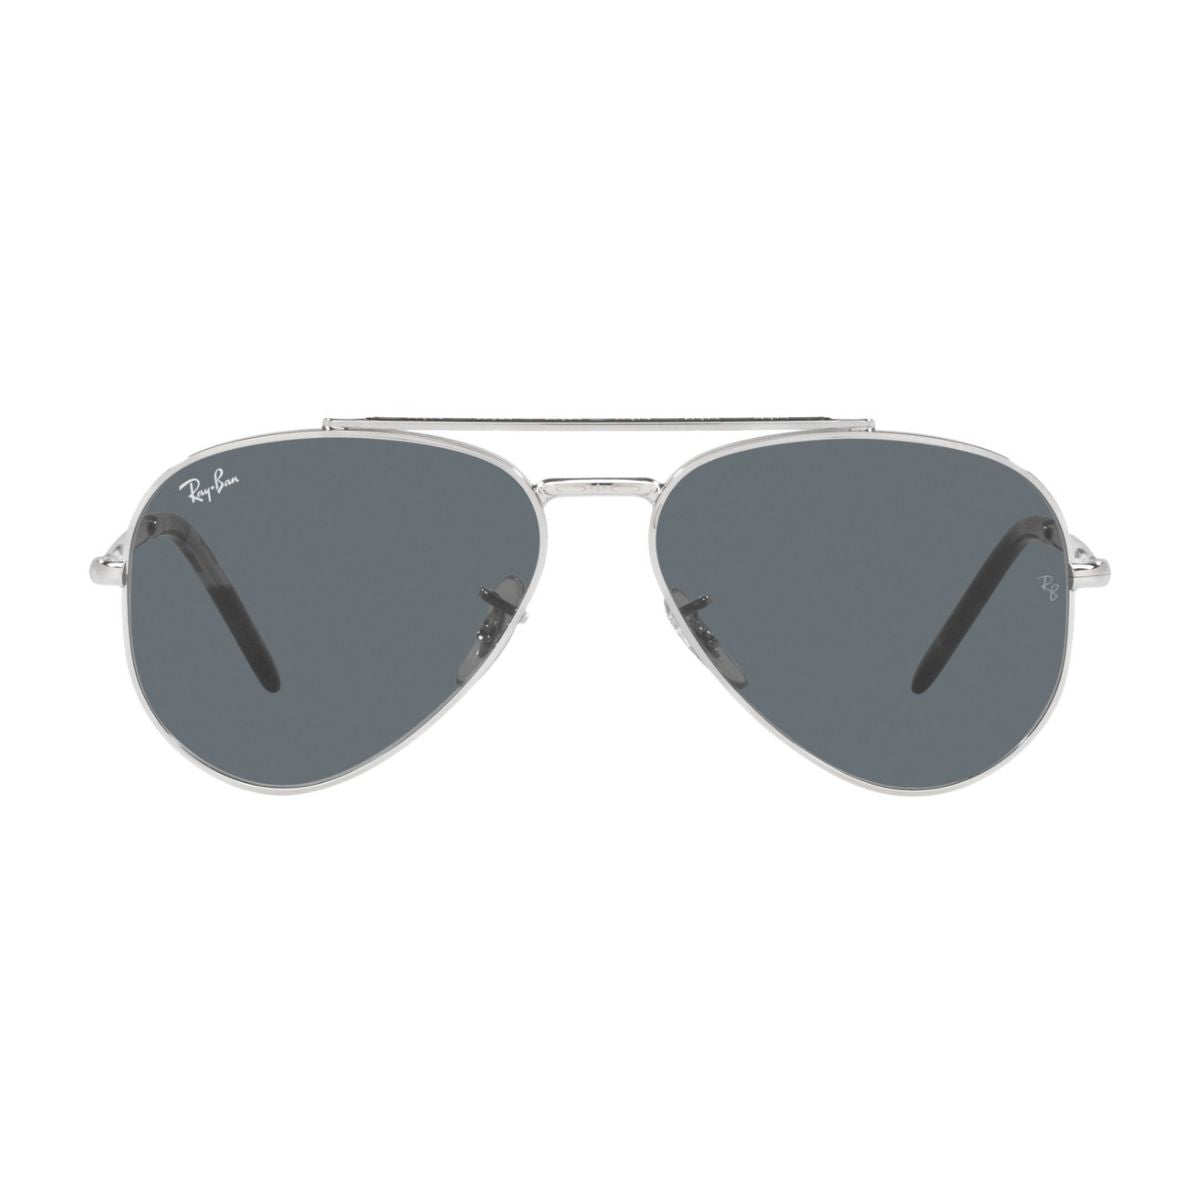 "Buy Rayban 3625 003/R5 UV Protected Sunglasses For Men's At Optorium"